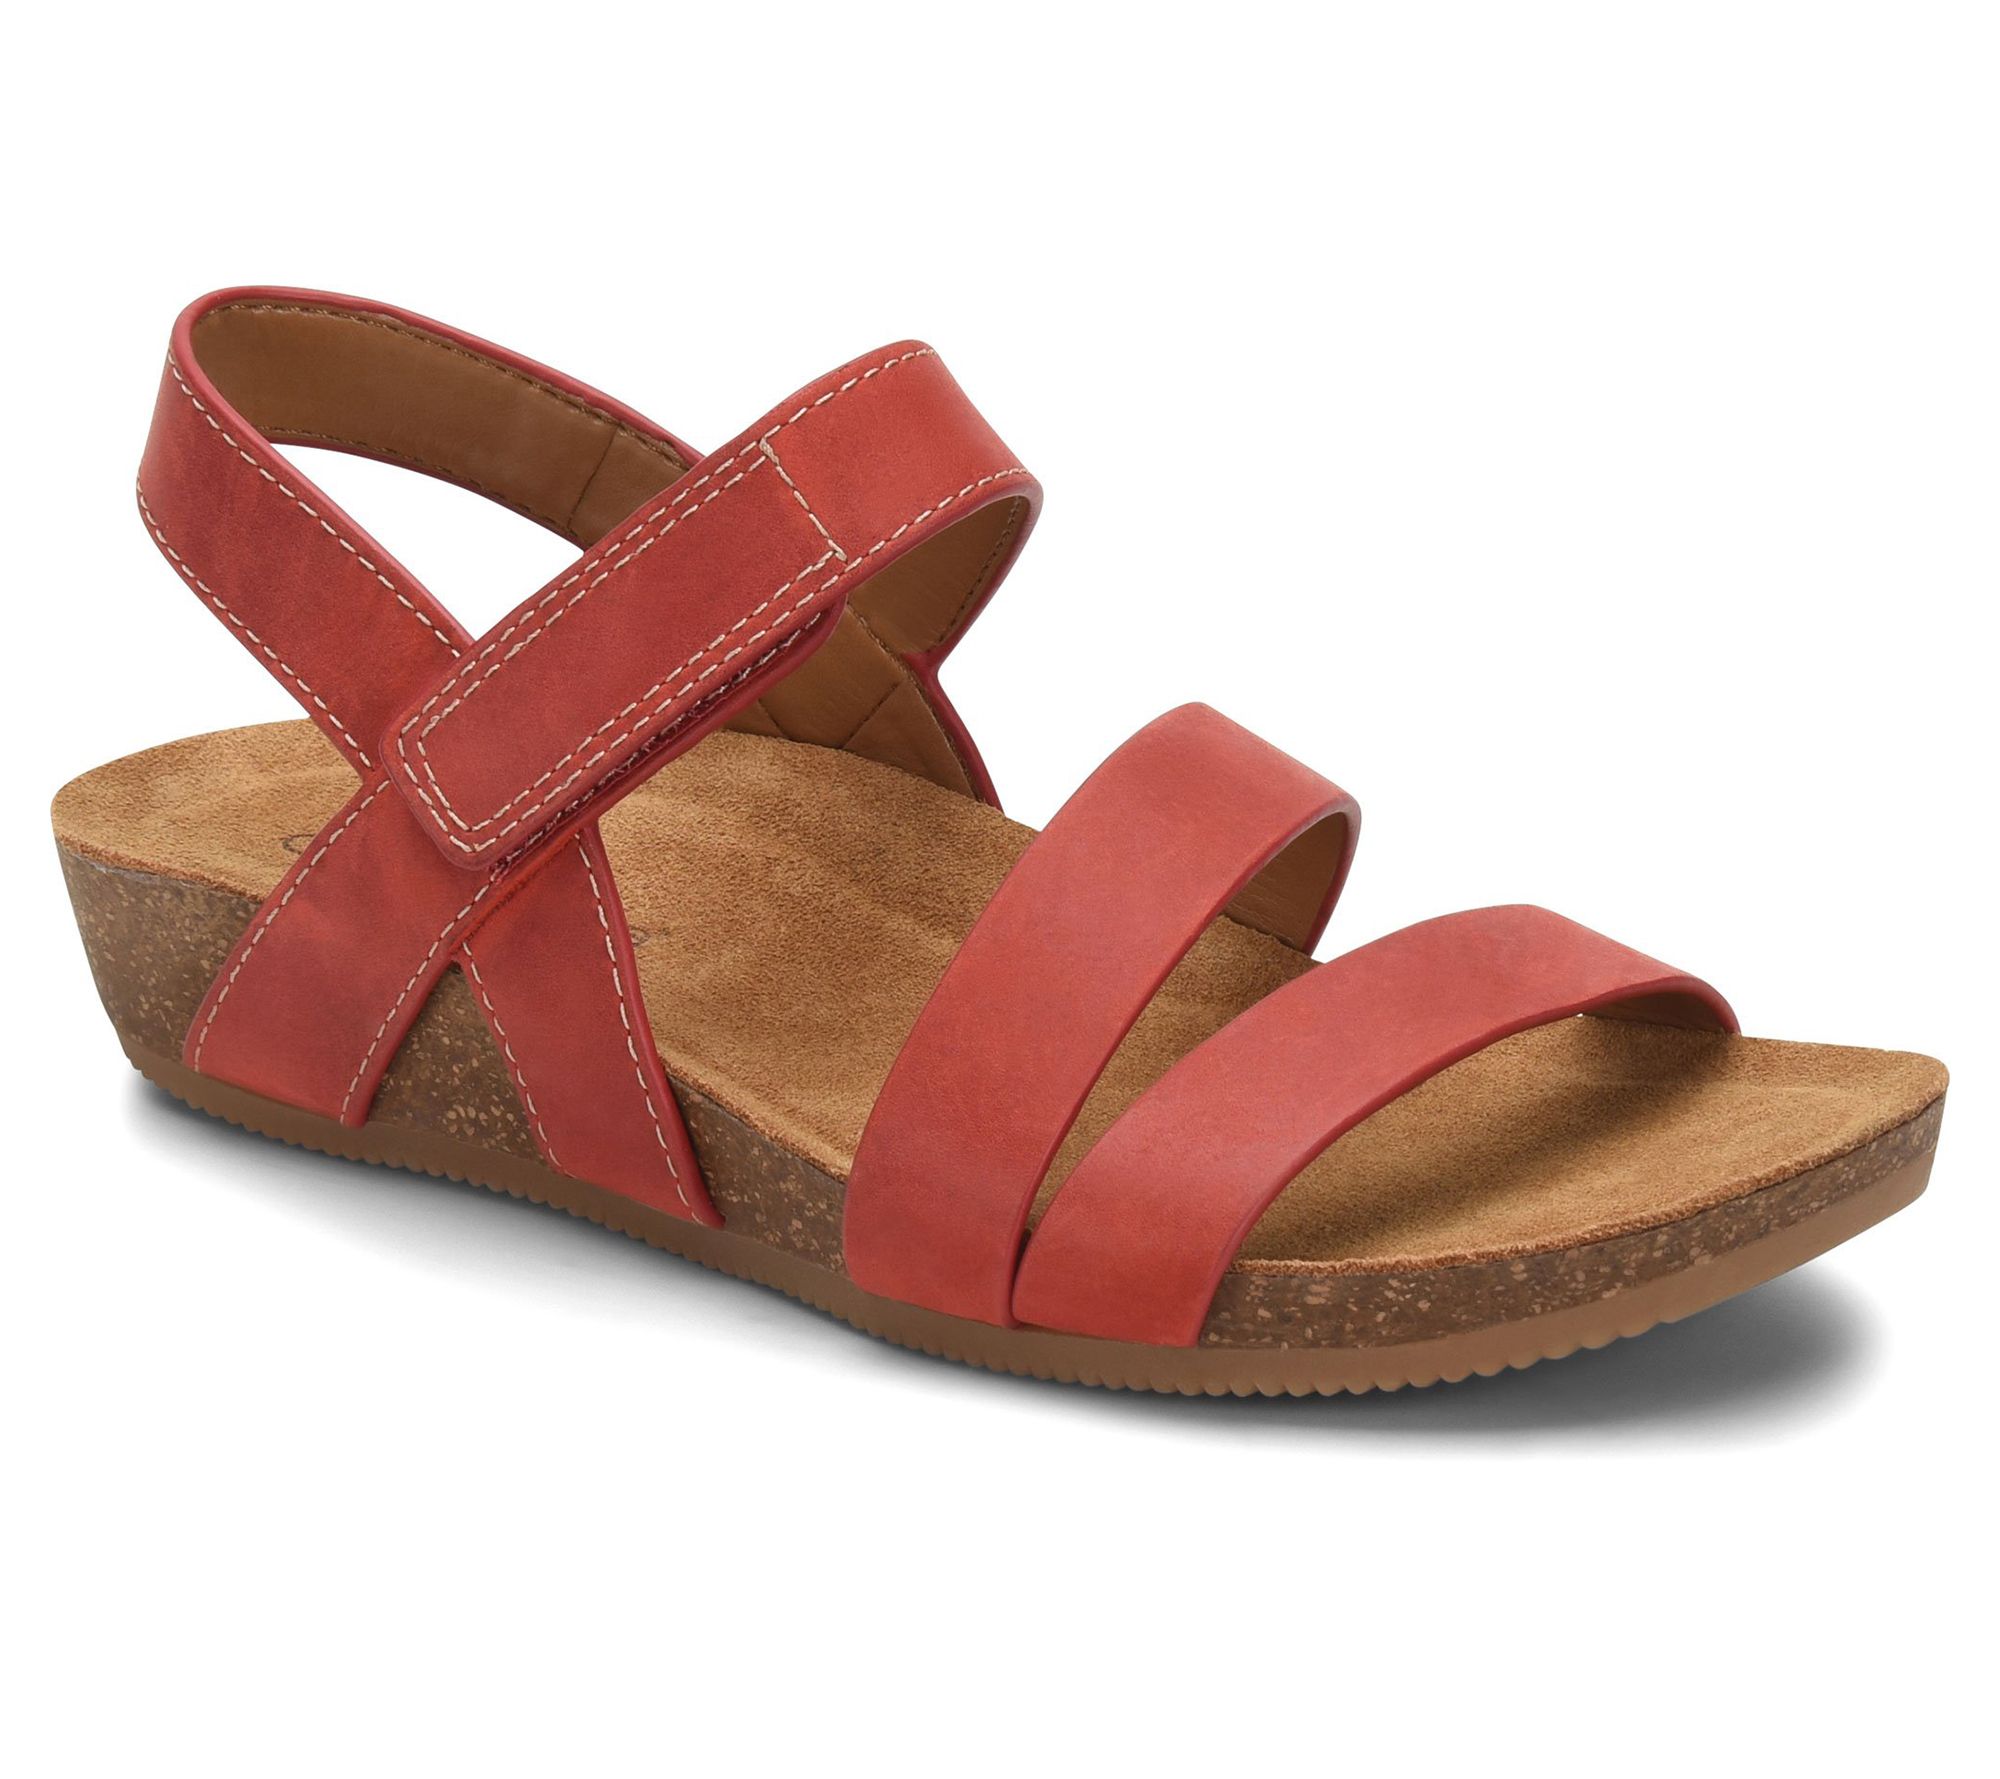 Comfortiva Strappy Leather Sandals - Gardena - QVC.com